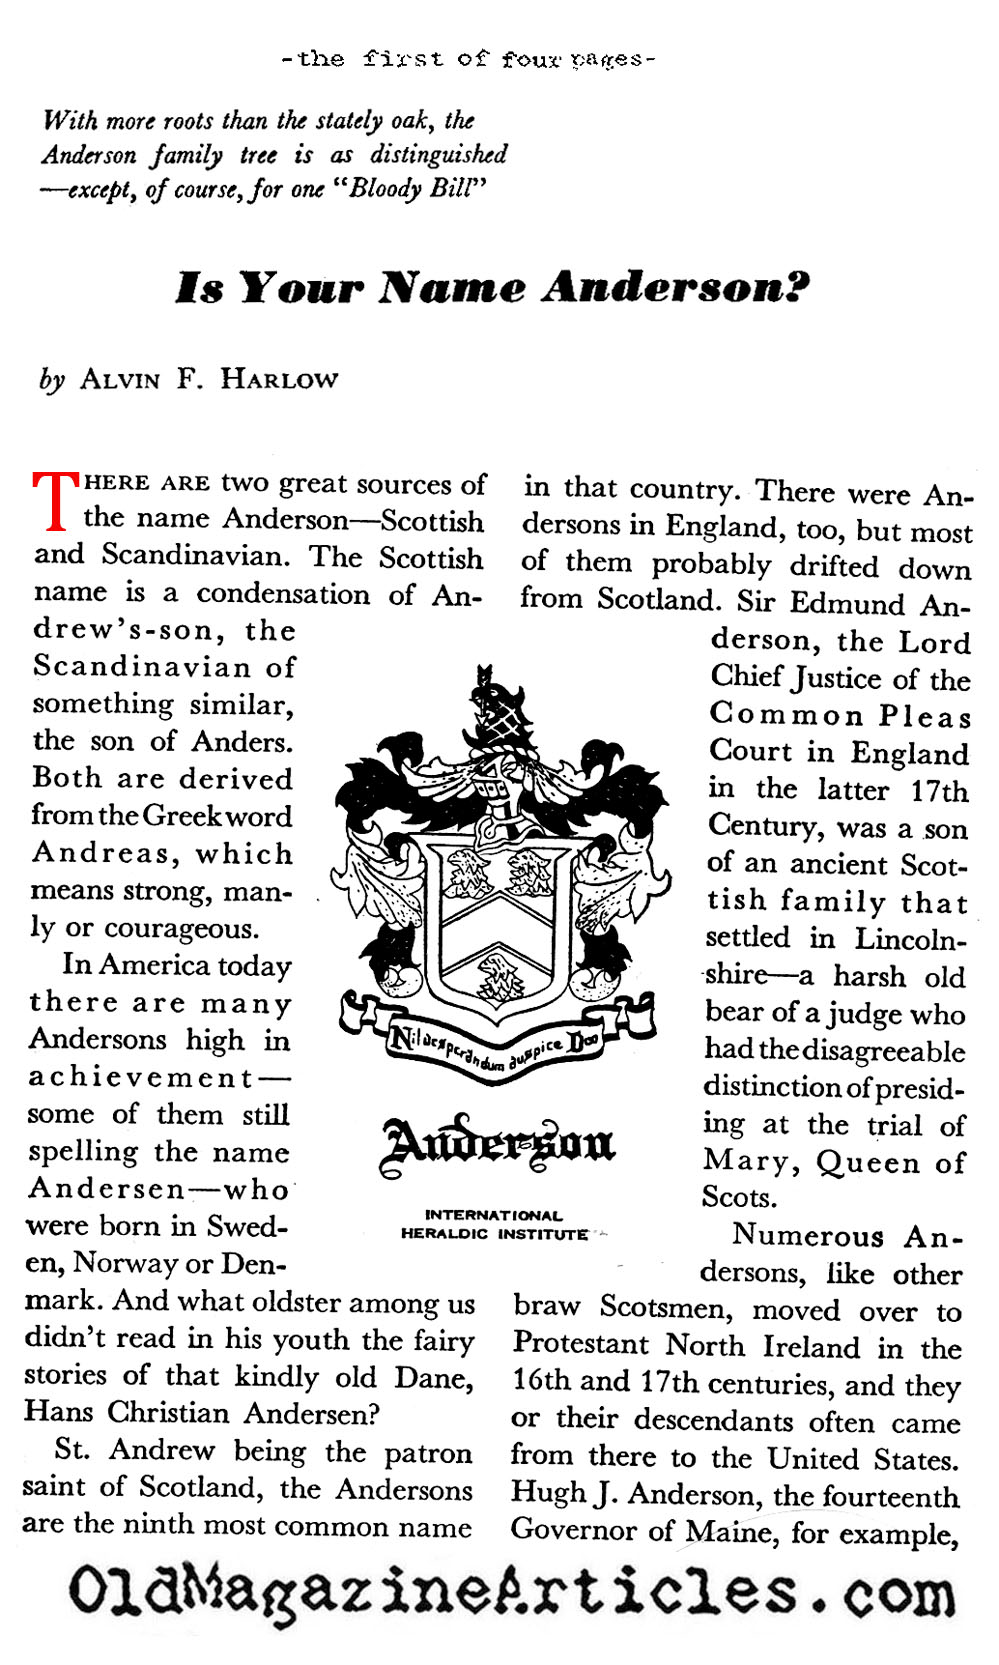 The Anderson Family History (Coronet Magazine, 1941)